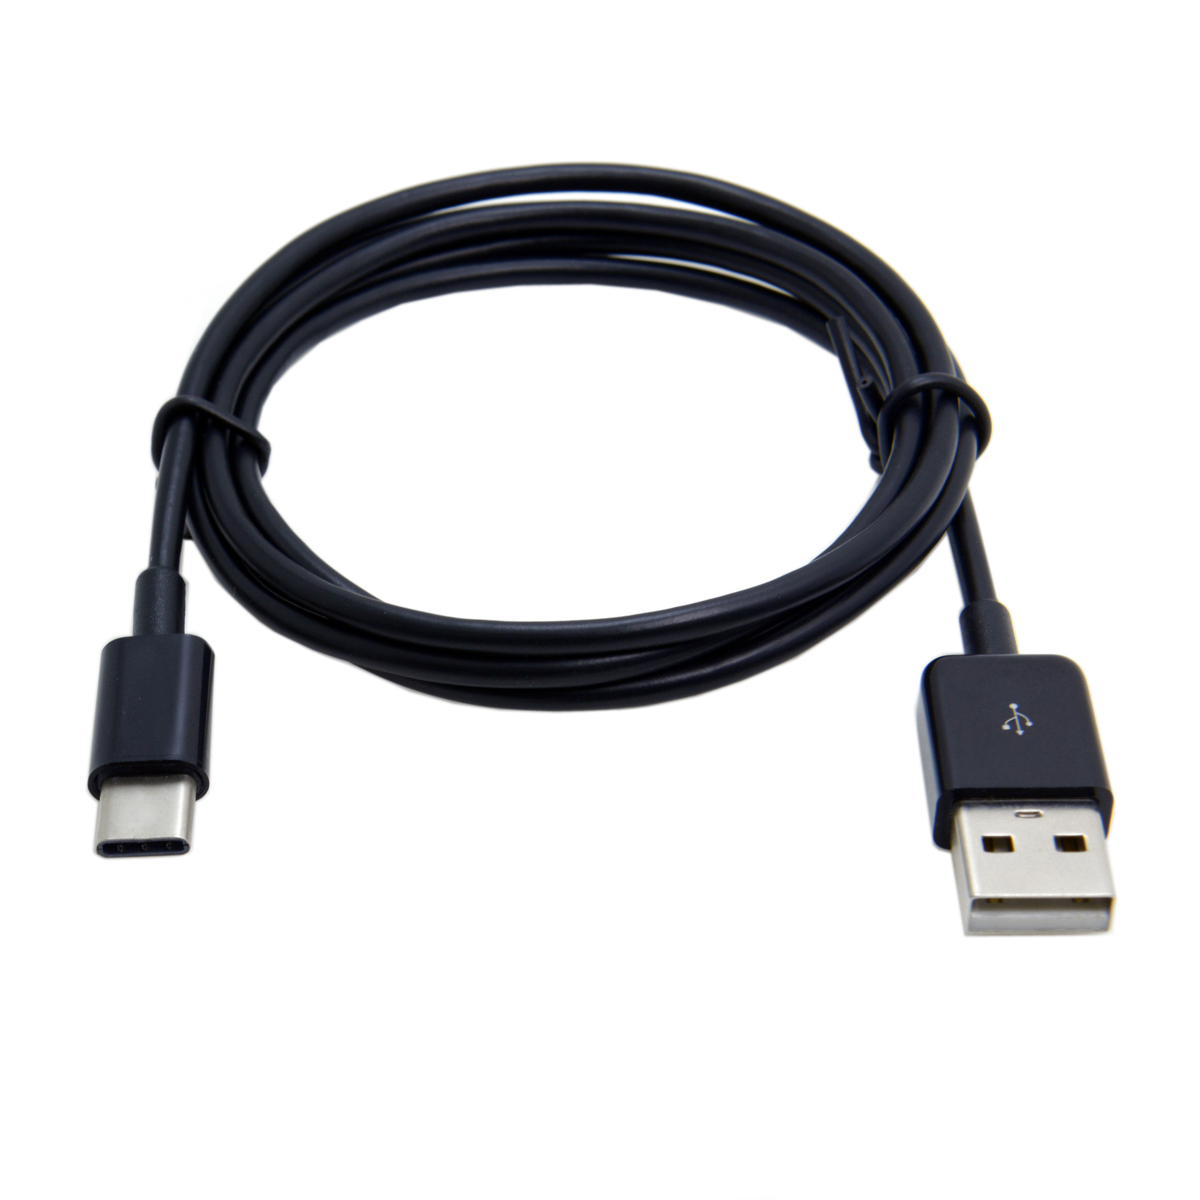 UC-312 USB 3.1 C/M - USB 2.0 A/M, černý, 1m, kabel